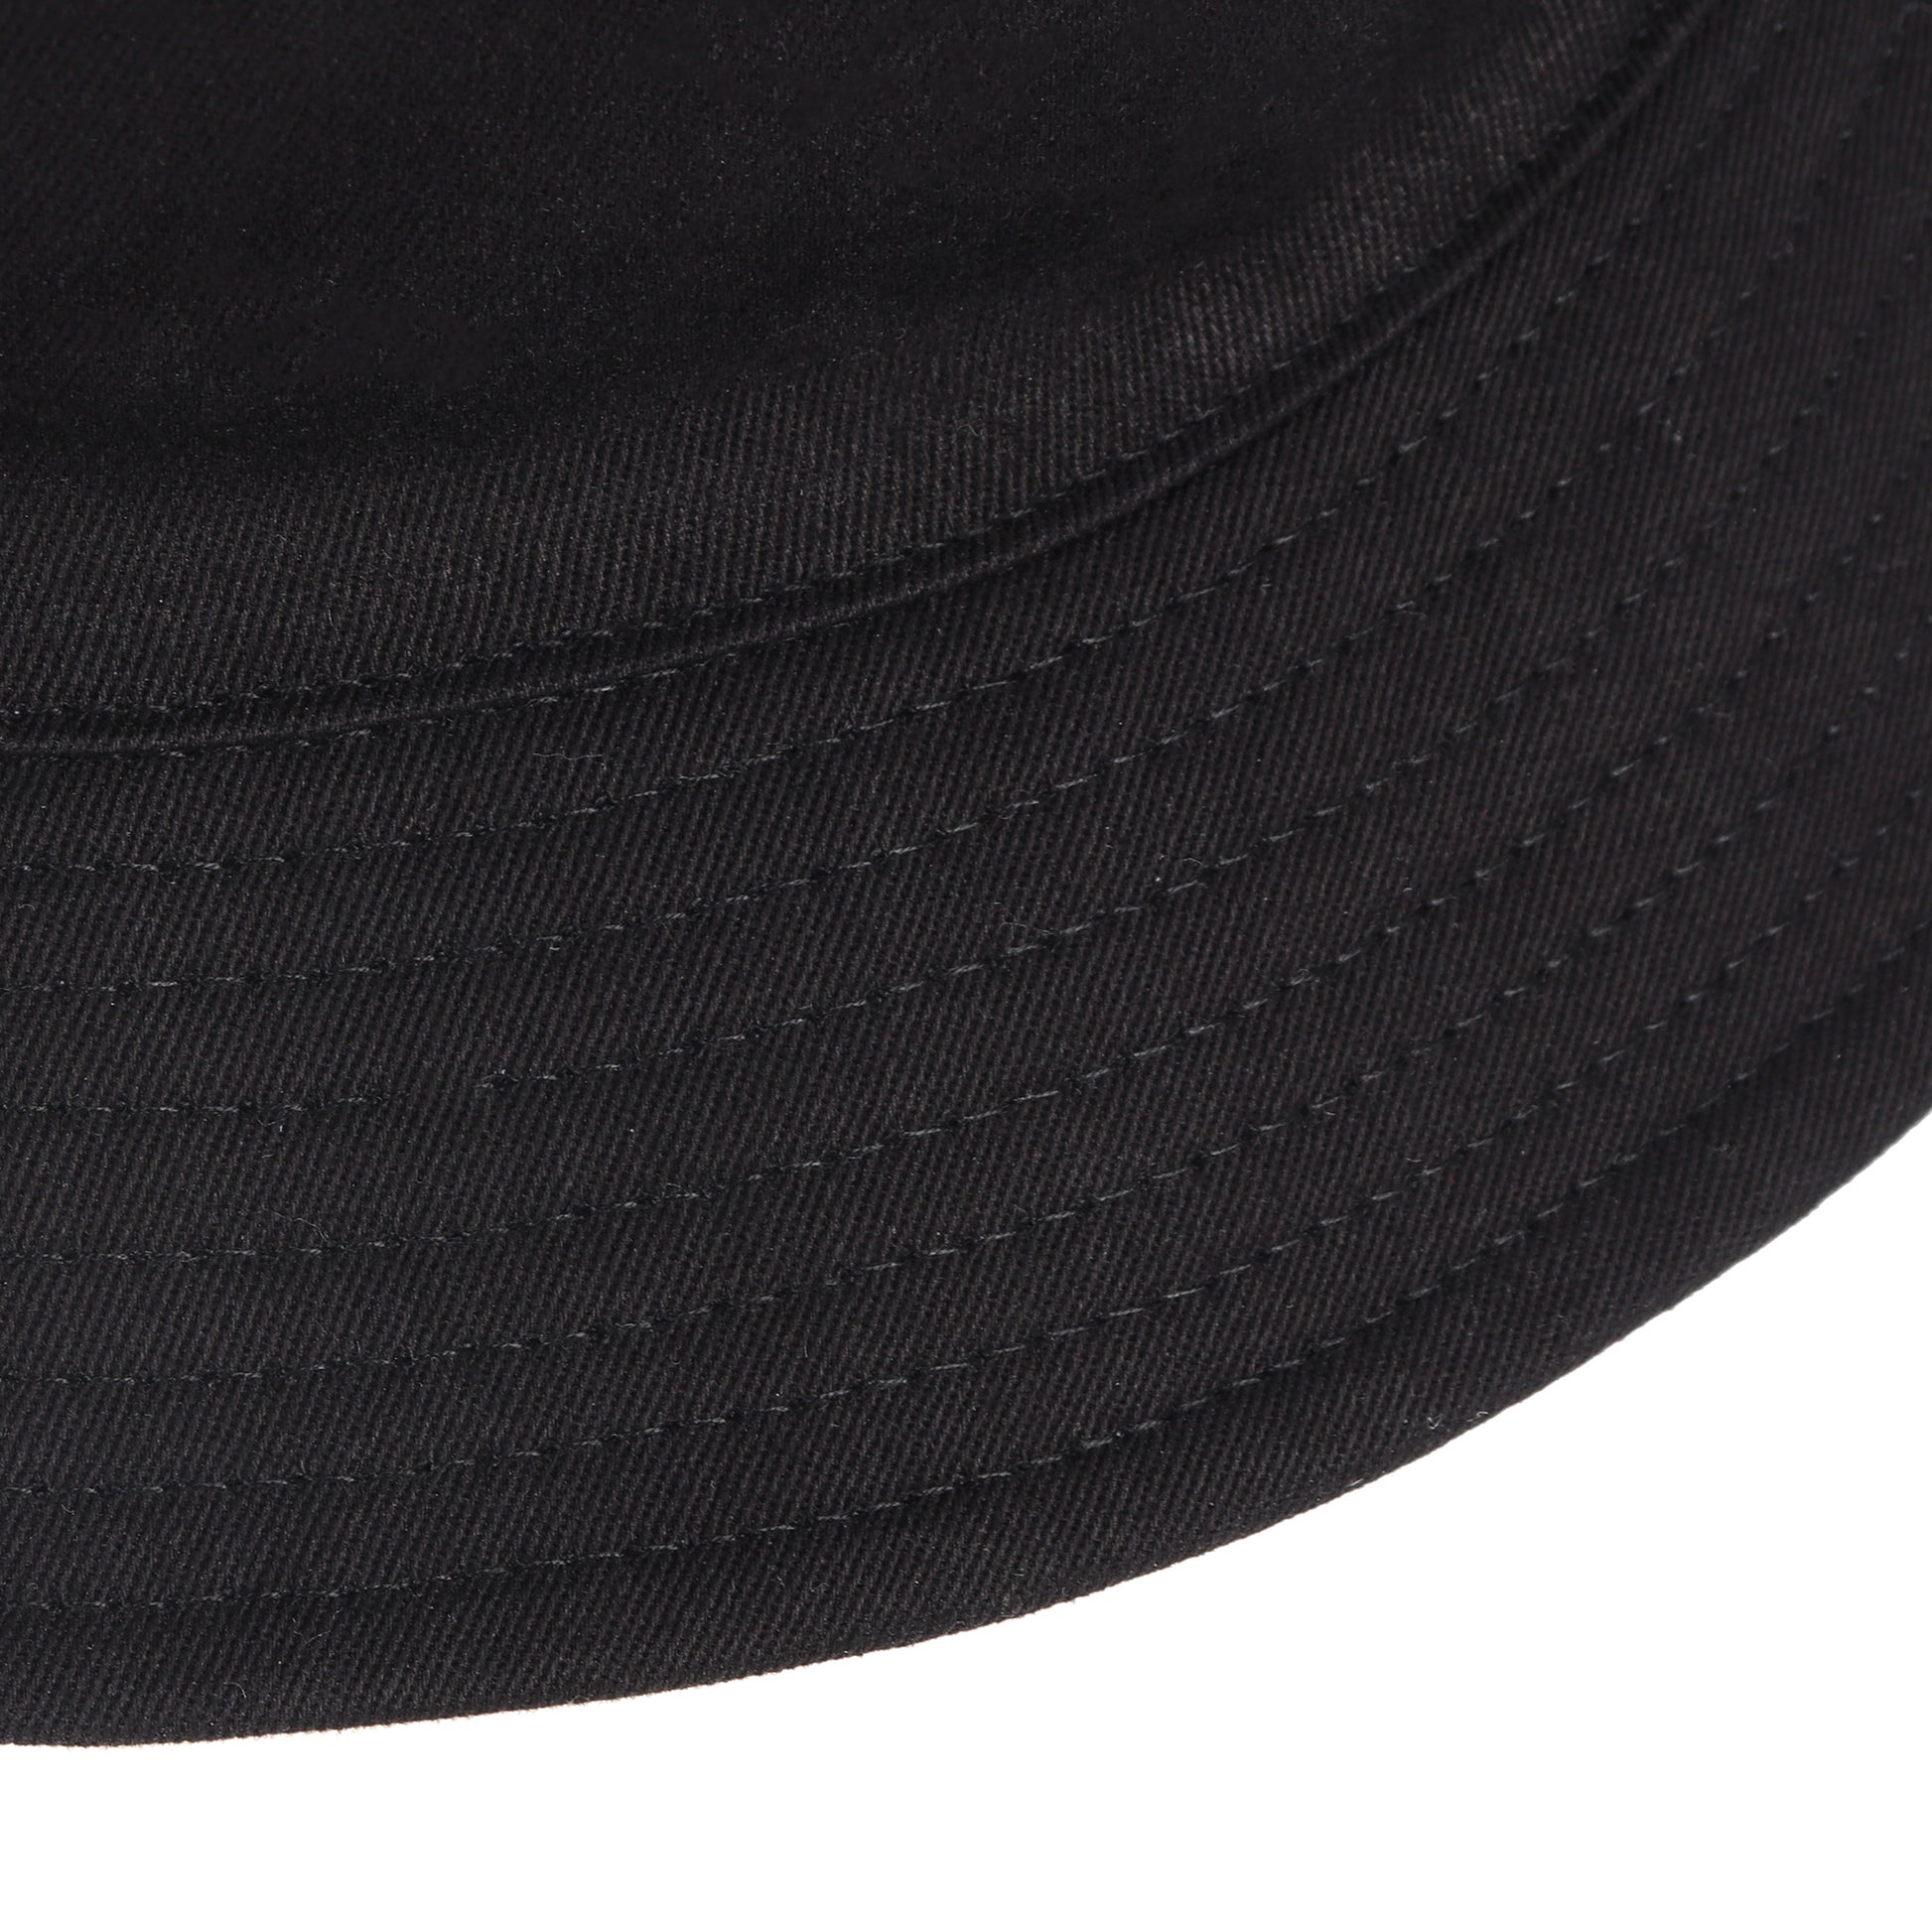 Zylioo Oversize XXL Washed Denim Bucket Hat,Large Vintage Jean Sun Hat,Packable  Travel Hats for Big Heads 22-25